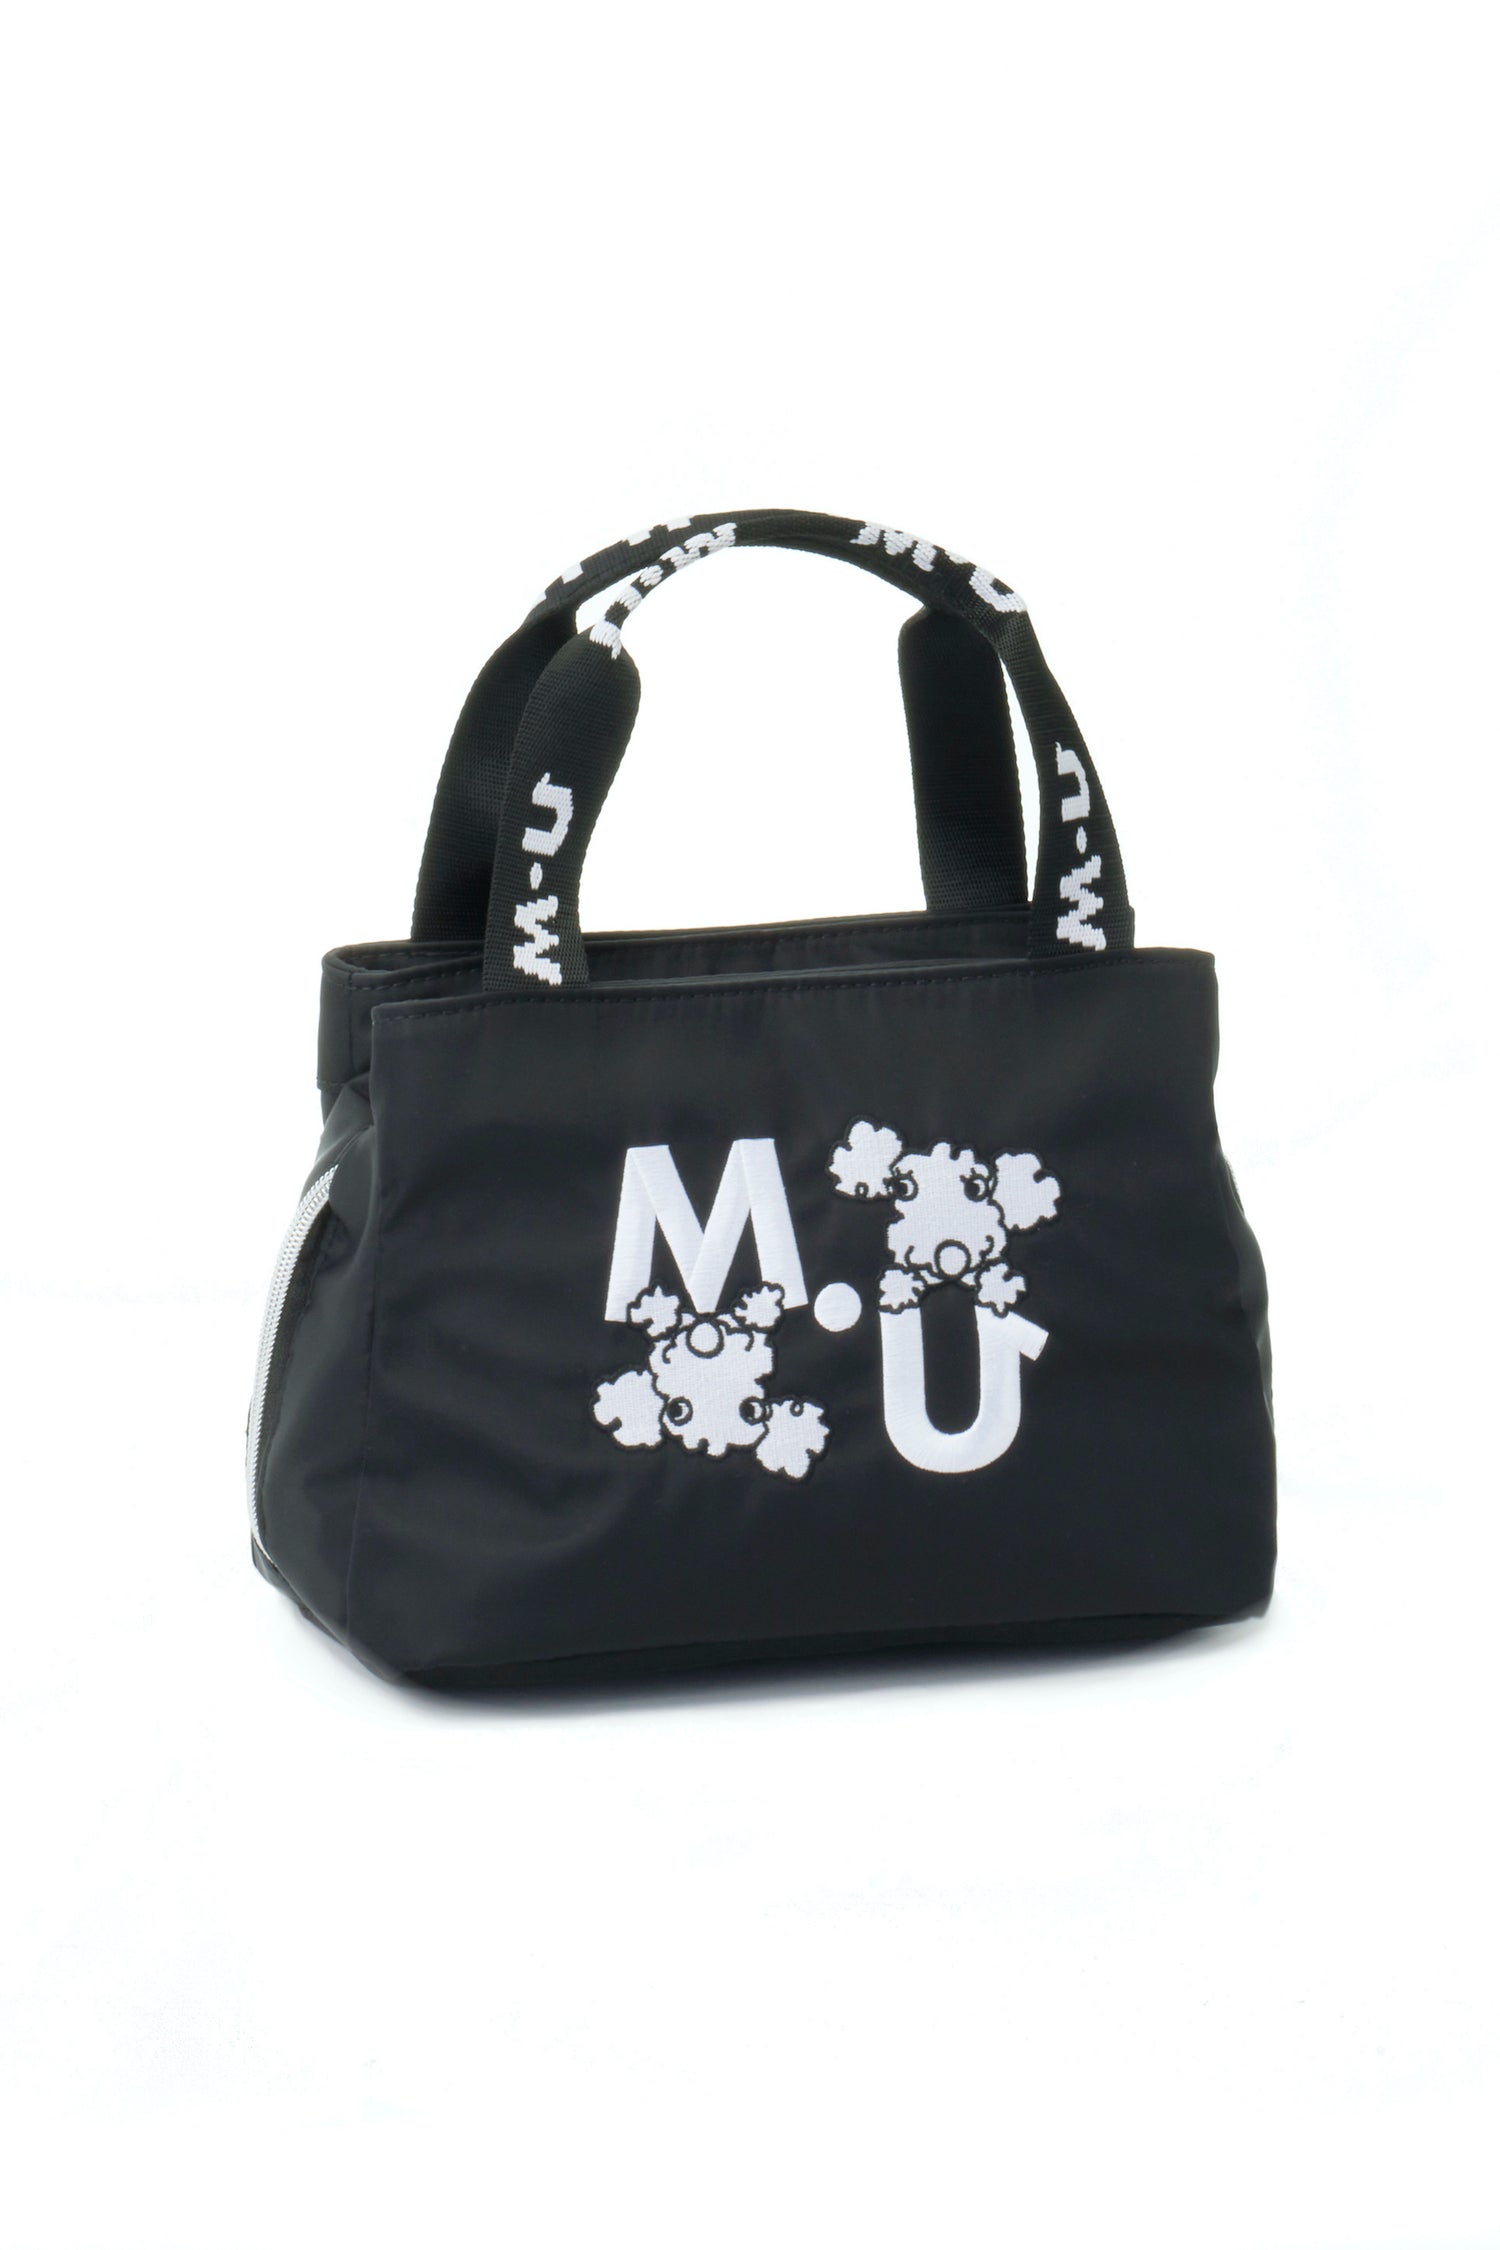 One-point pouch with SHUSHU+MU logo (703J2000)